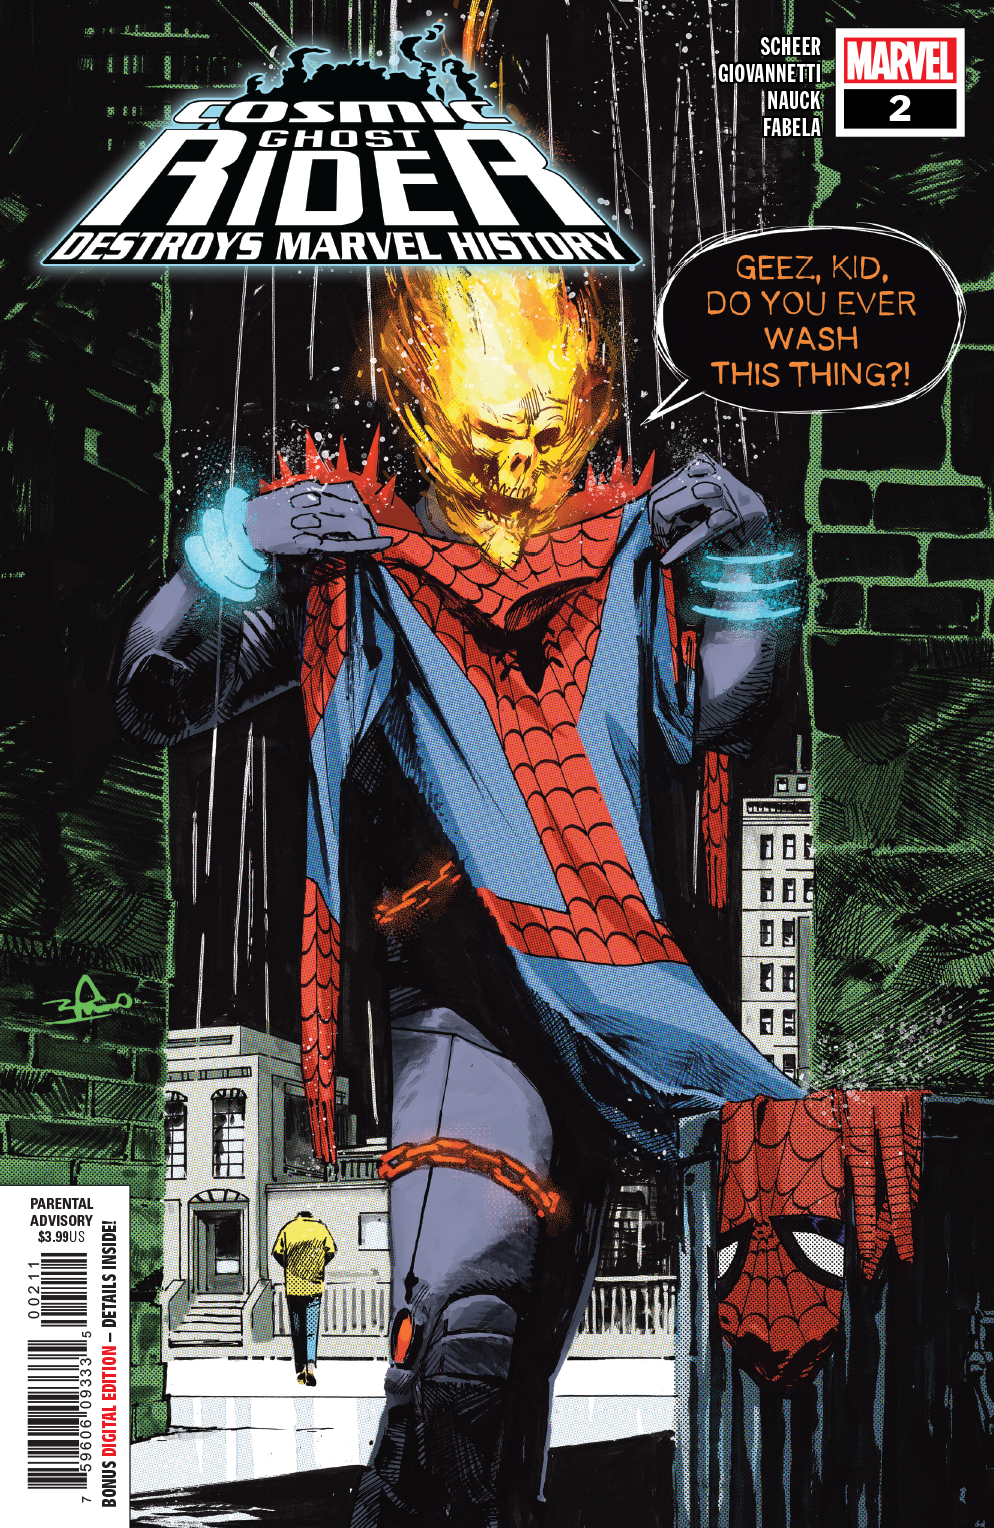 Cosmic Ghost Rider Destroys Marvel History no. 2 (2019 Series)